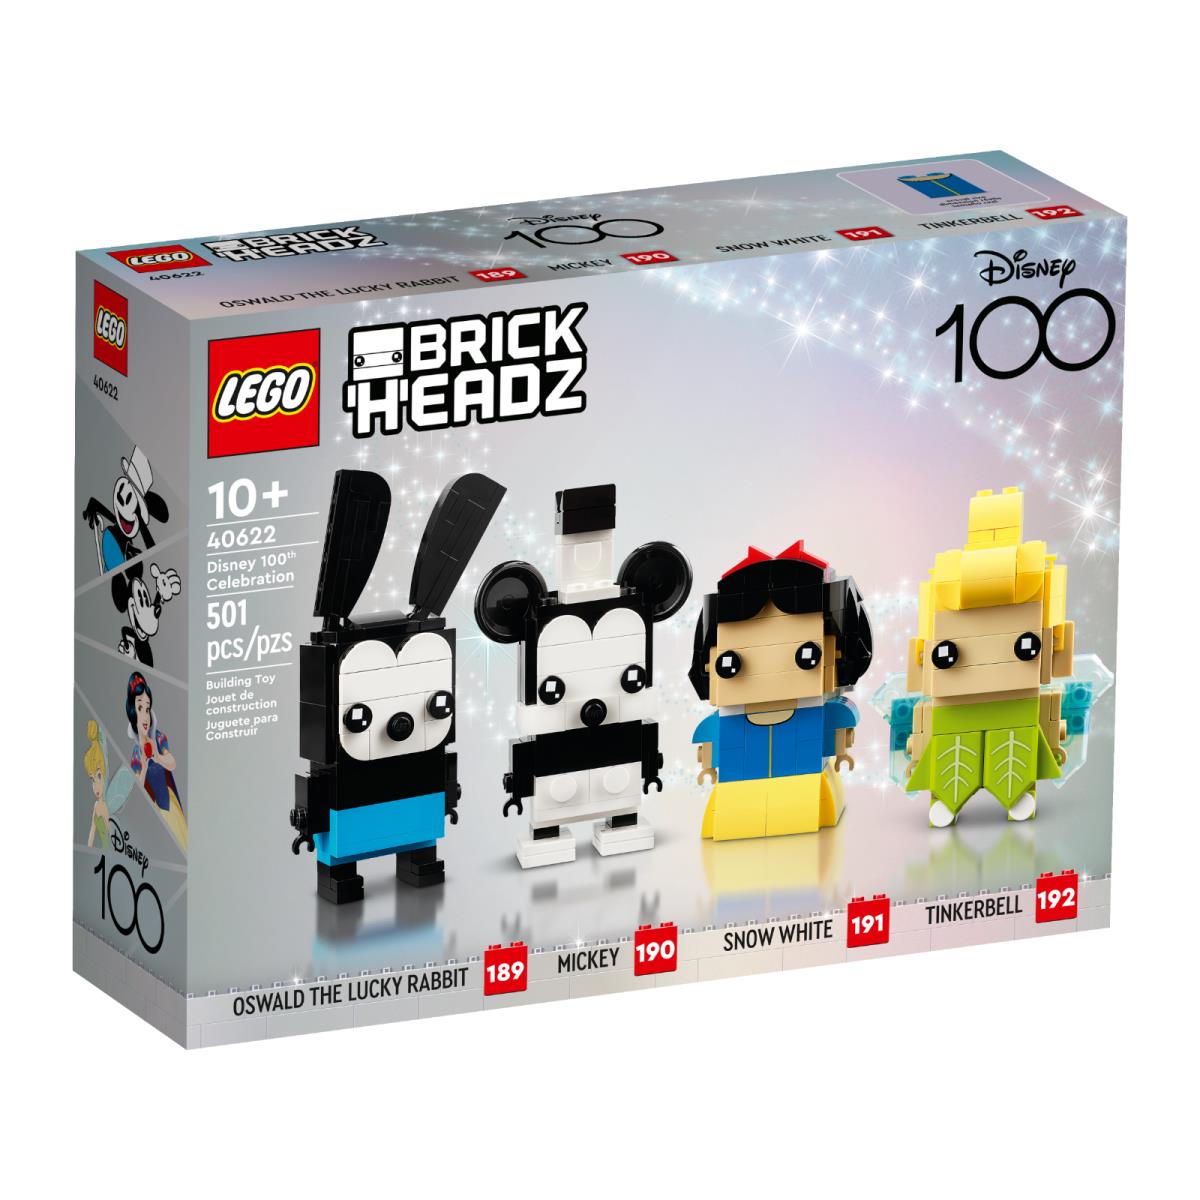 Lego 40622 Disney 100th Celebration Brickheadz Perfect Box Guarantee